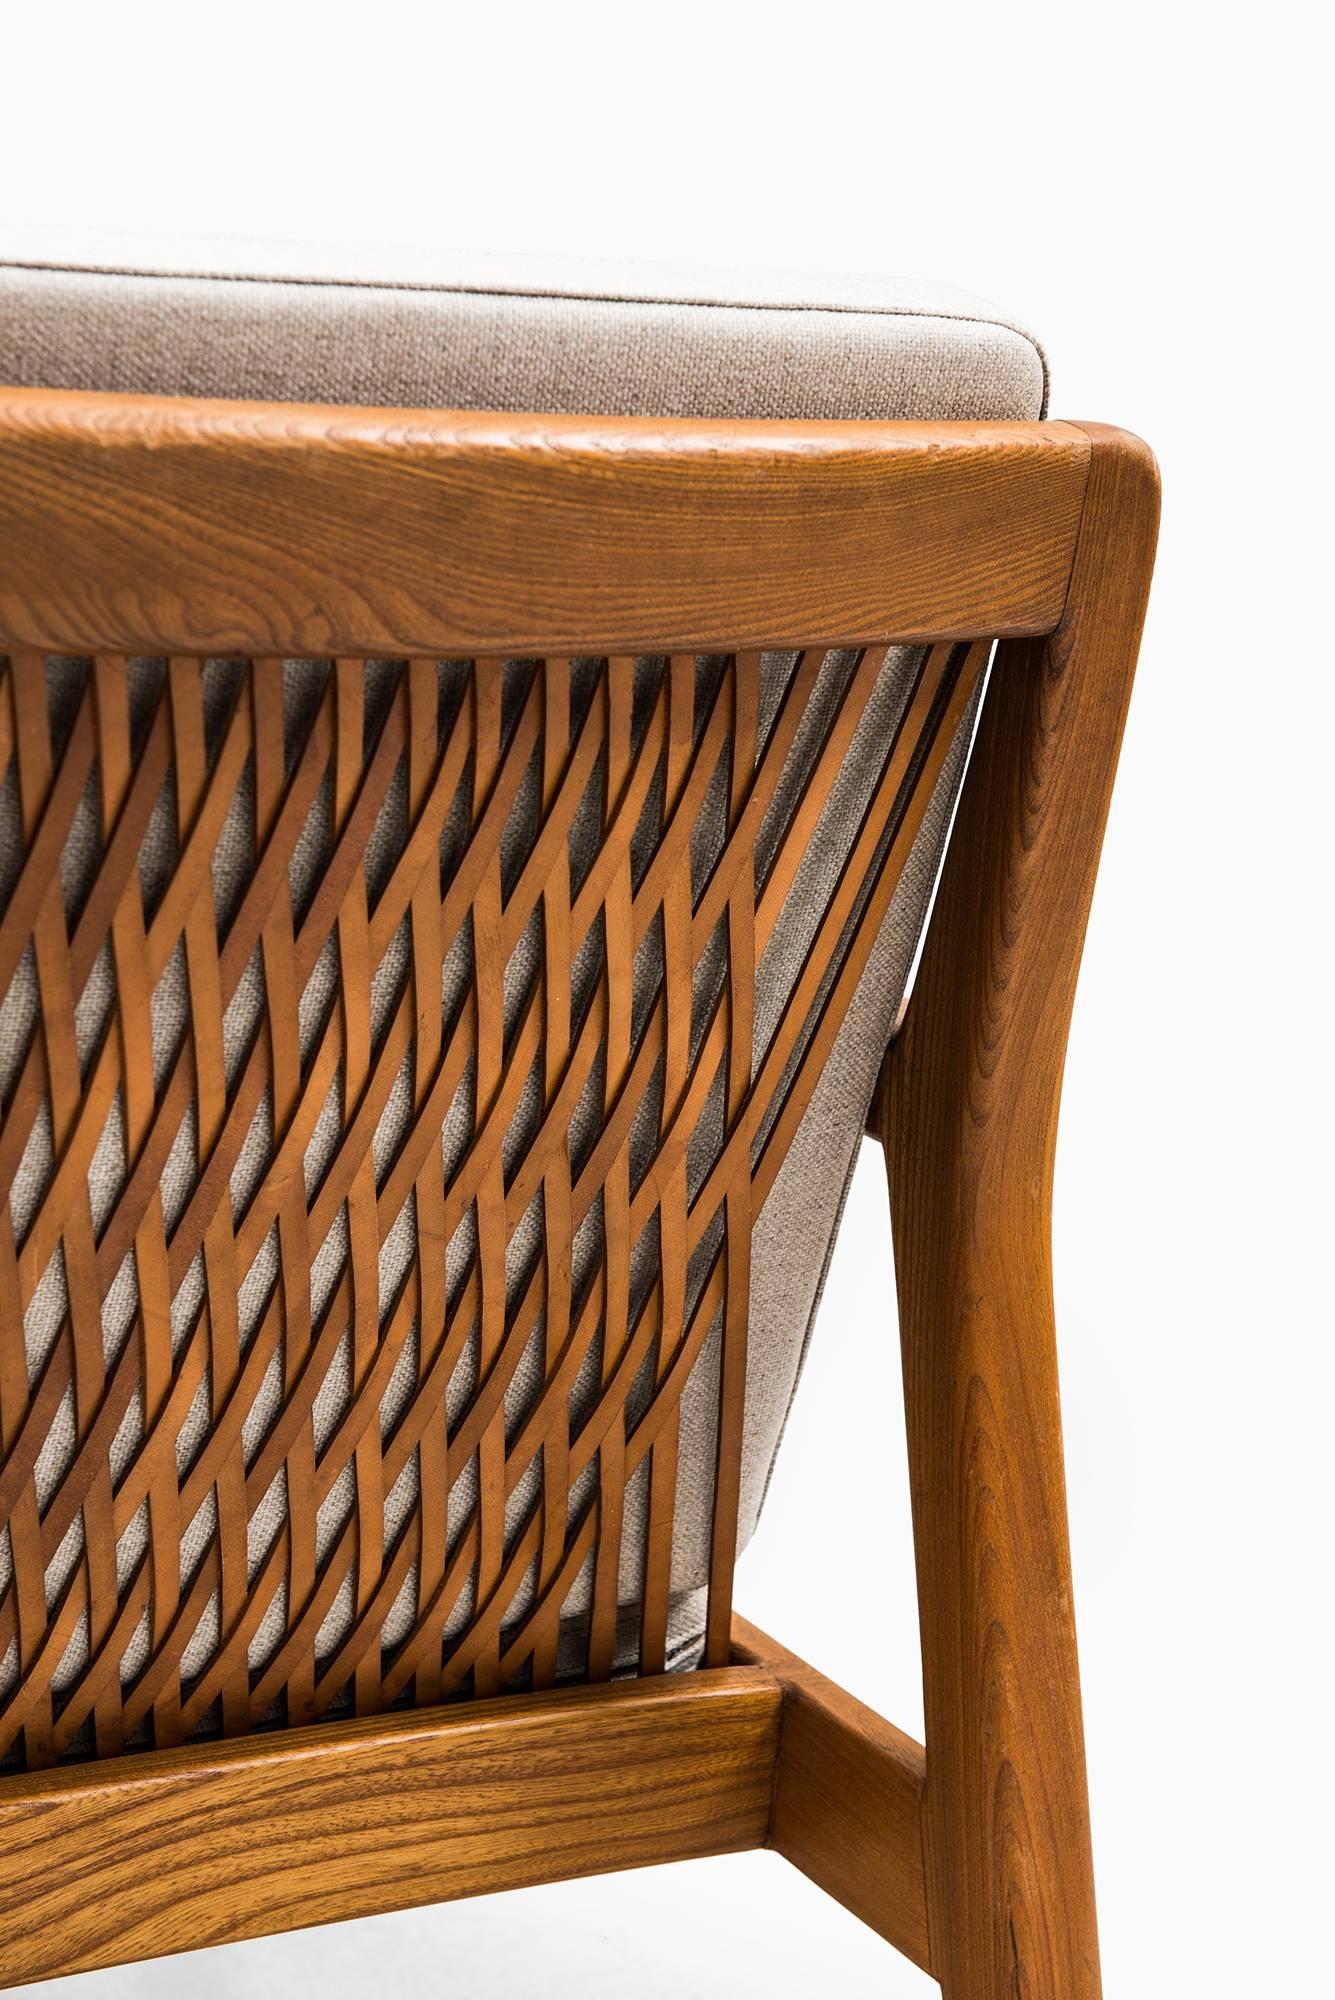 Carl Gustaf Hiort af Ornäs Easy Chairs Model Trienna Produced in Finland 2